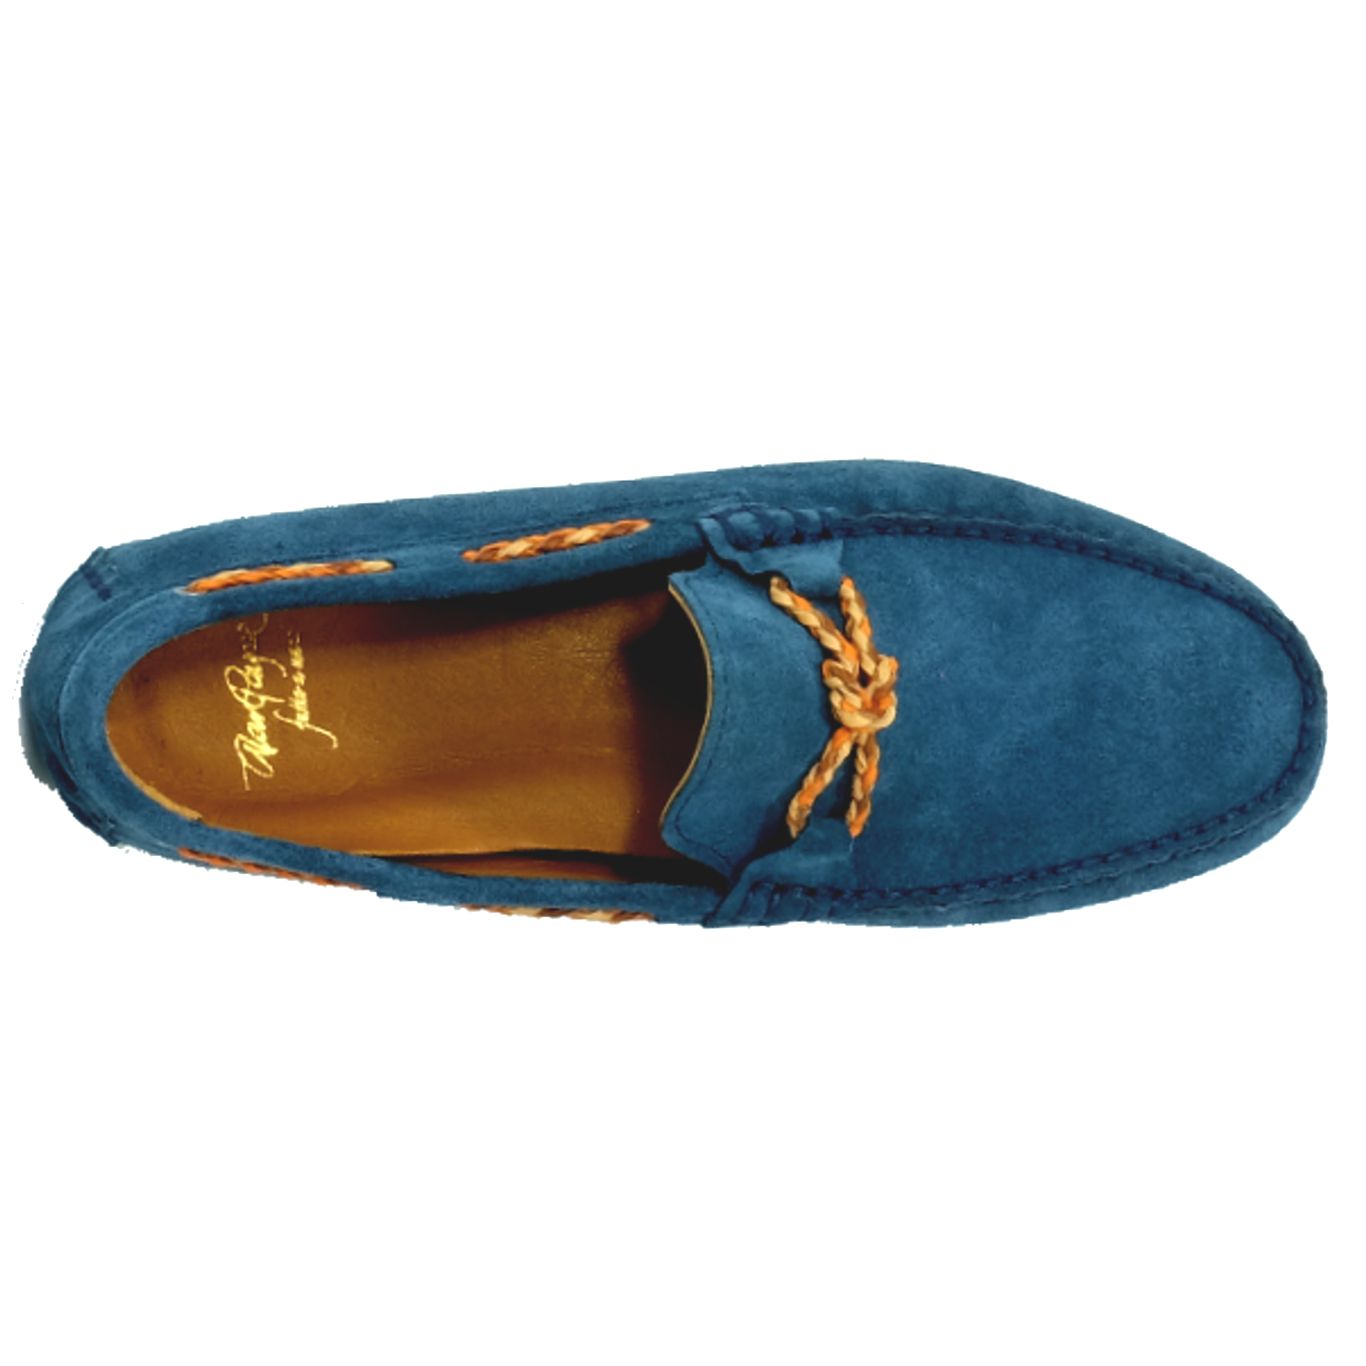 Antioch Suede Lace Loafer in Indigo by Alan Payne Footwear